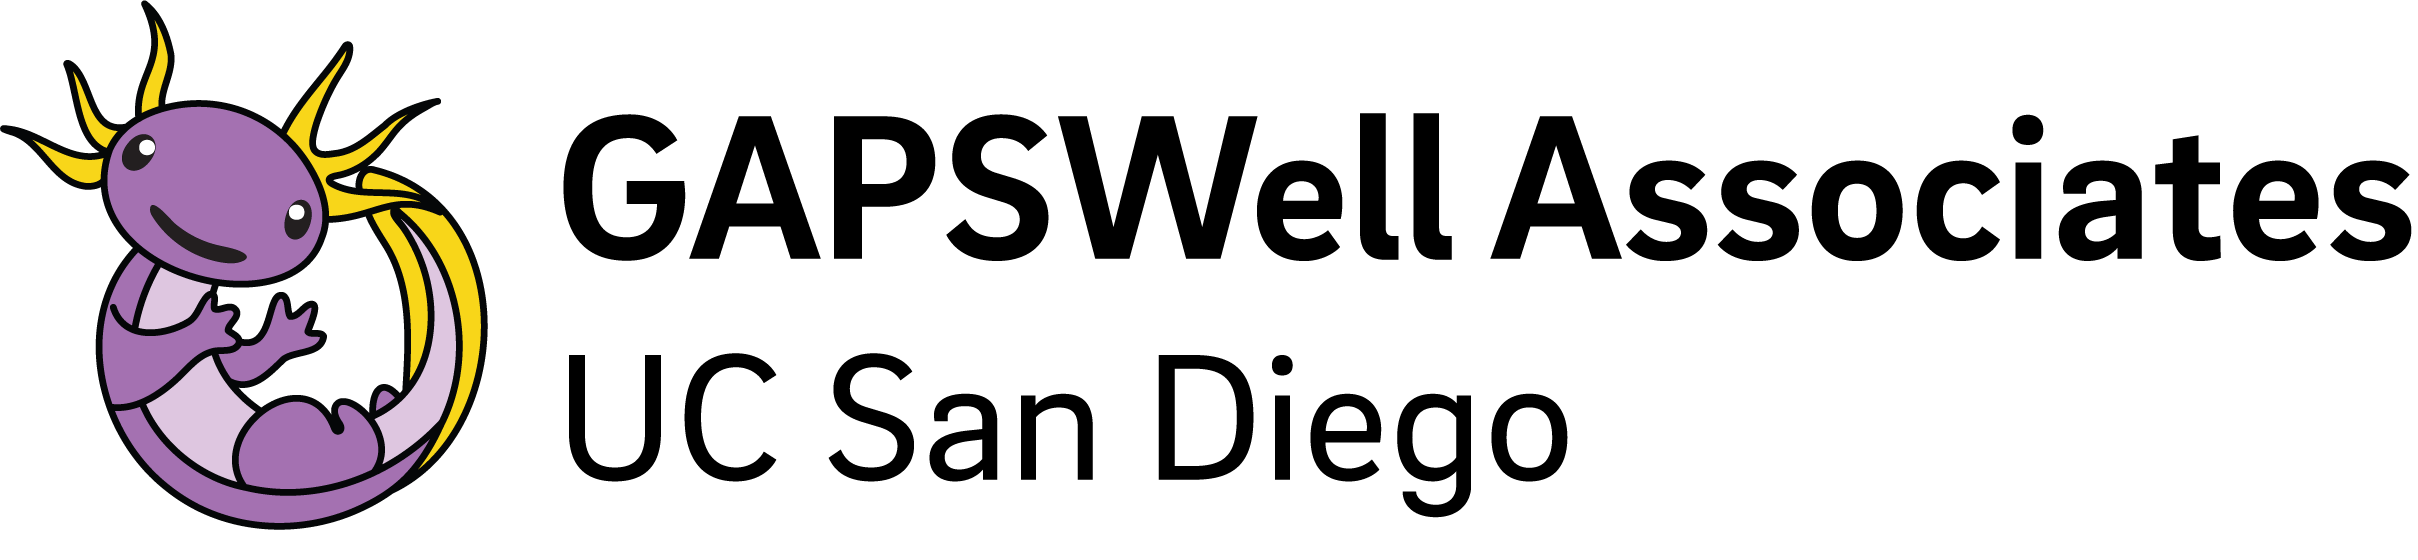 GAPSWell-logo_black-type.png